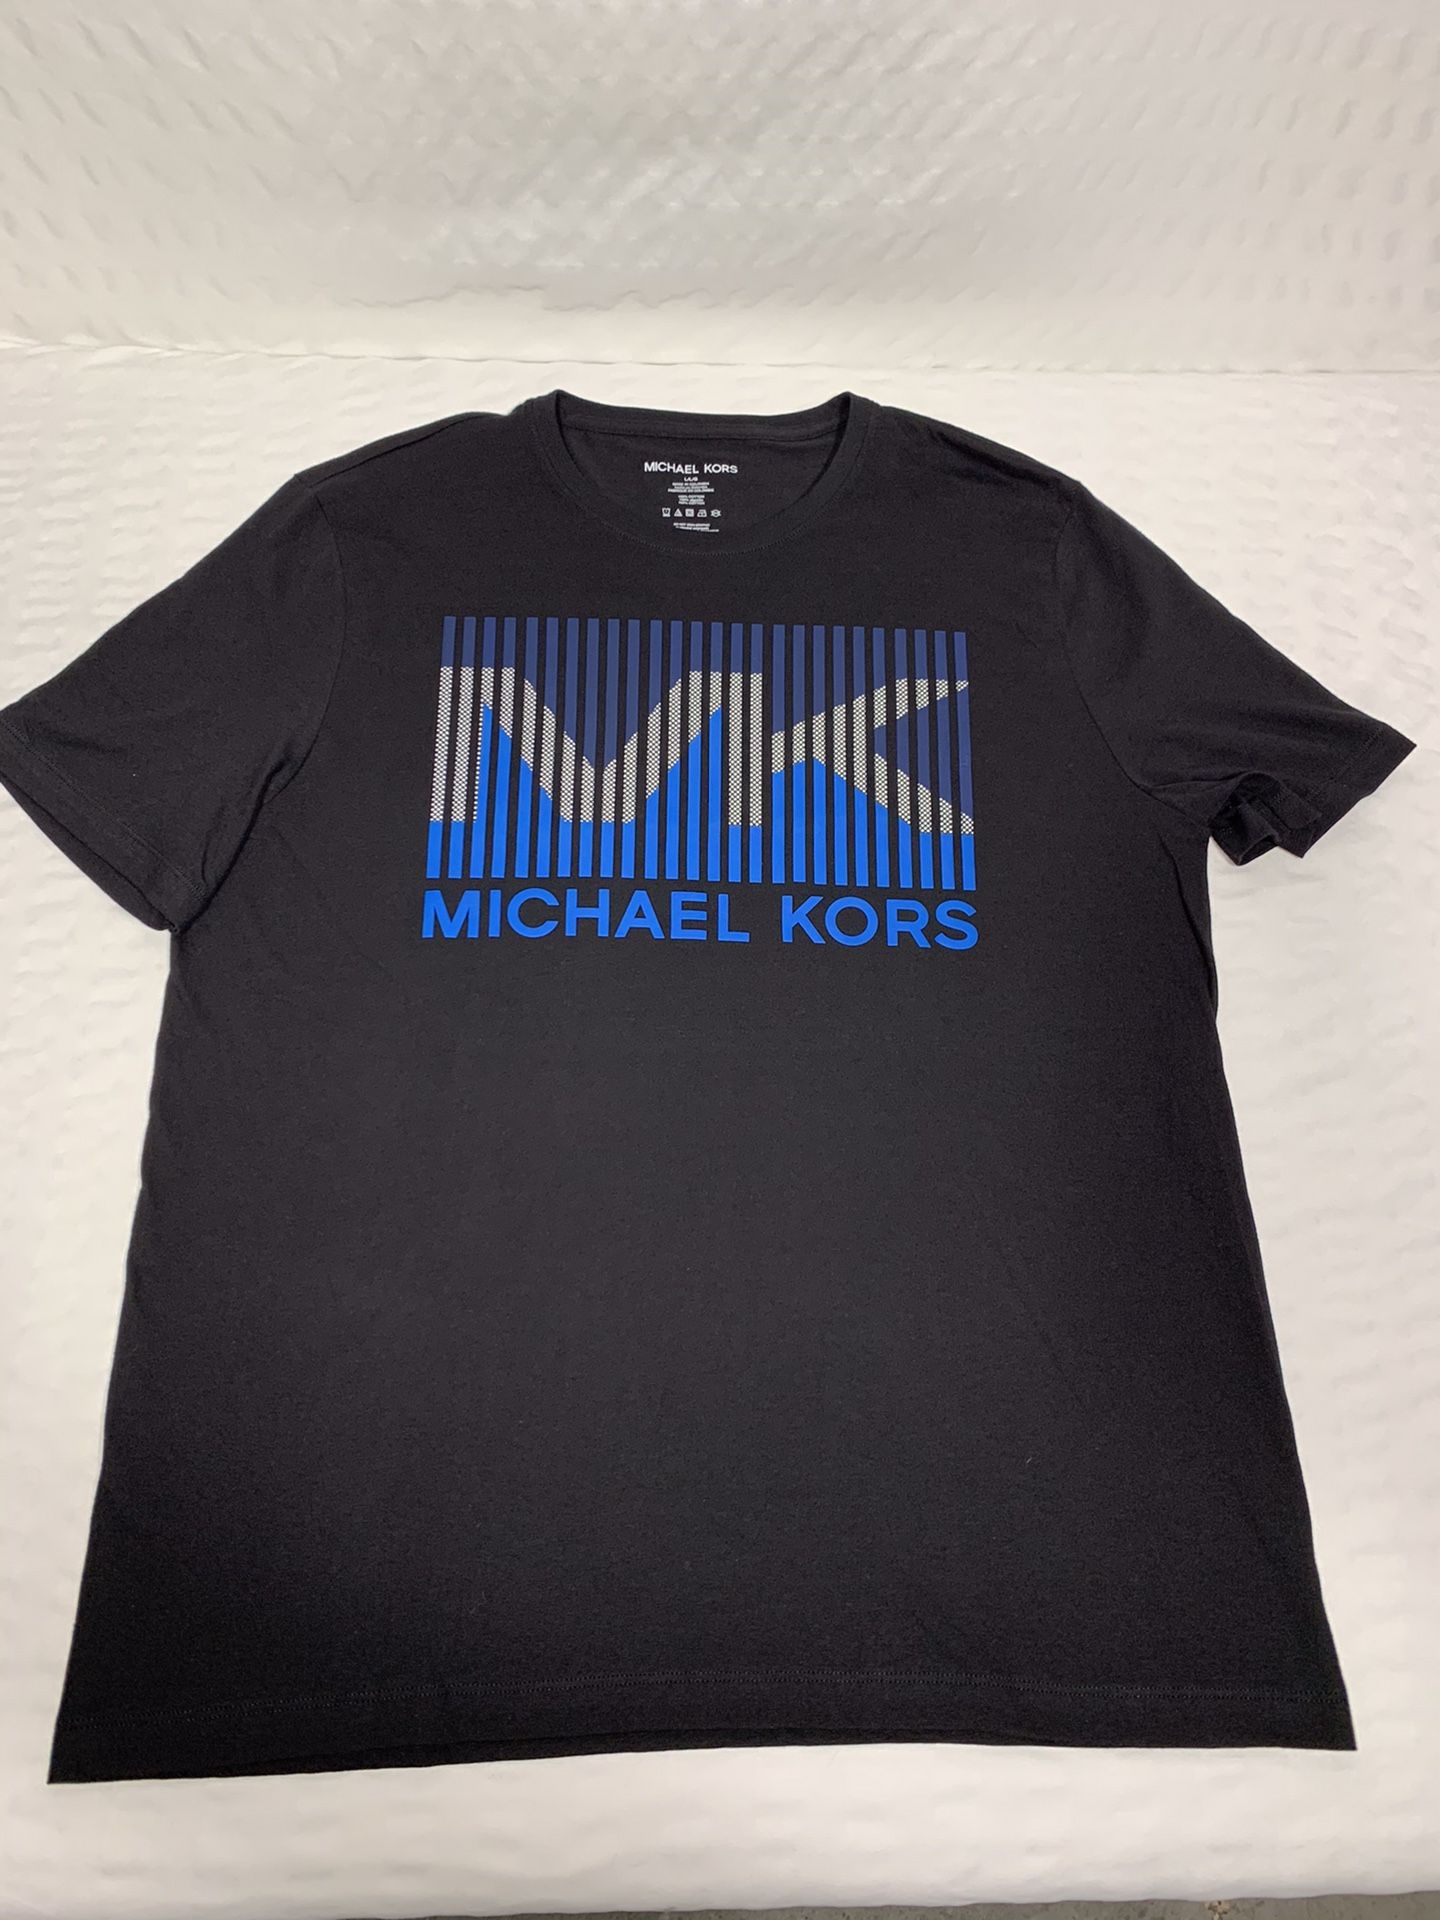 NEW MICHAEL KORS/Black Graphic T-Shirt